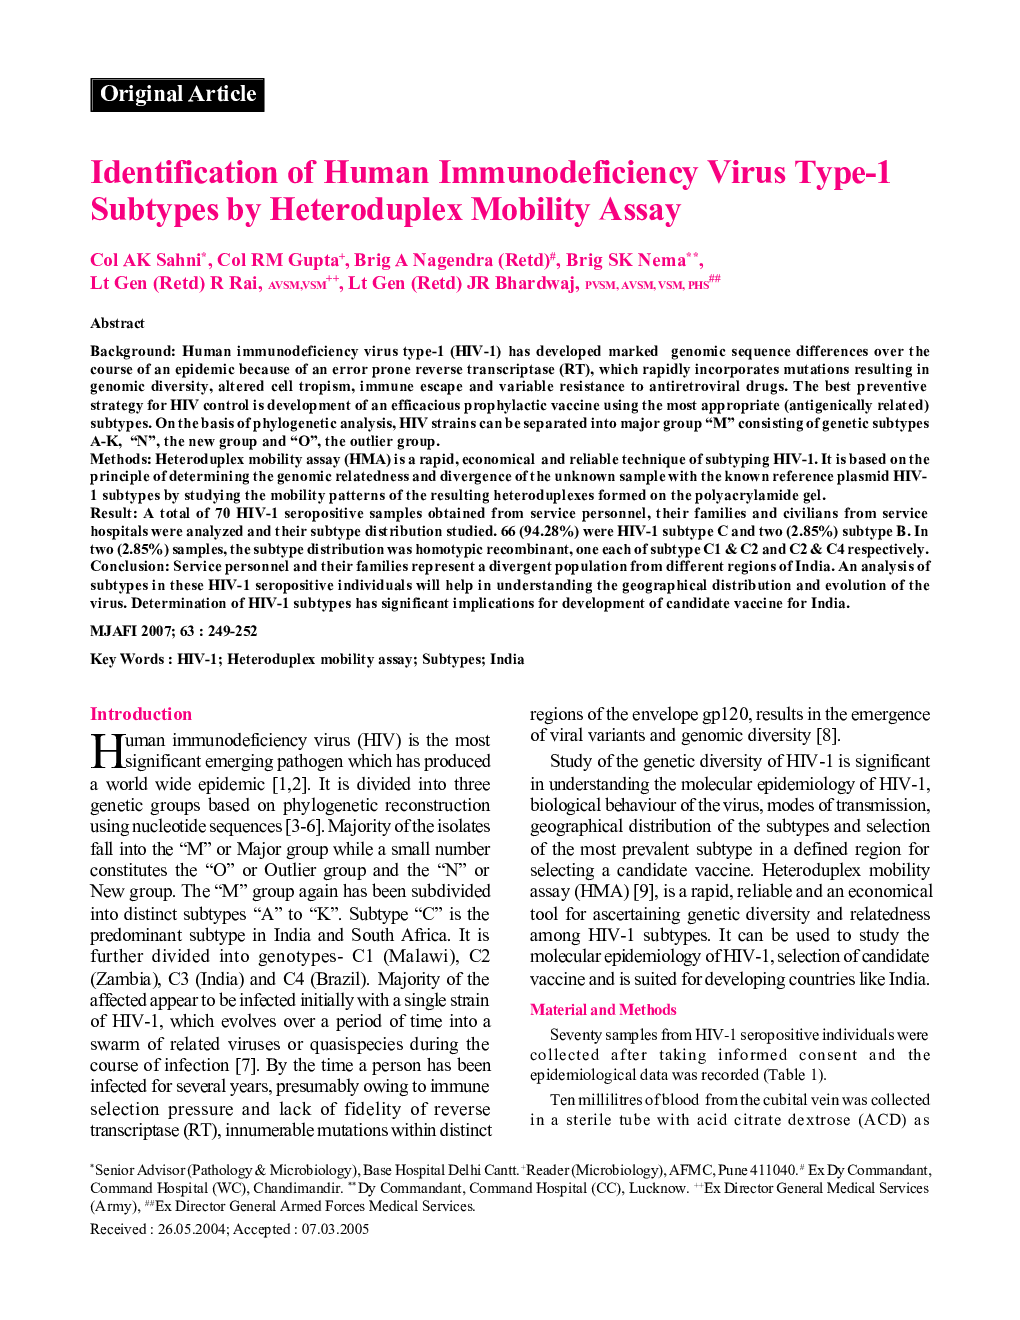 Identification of Human Immunodeficiency Virus Type-1 Subtypes by Heteroduplex Mobility Assay